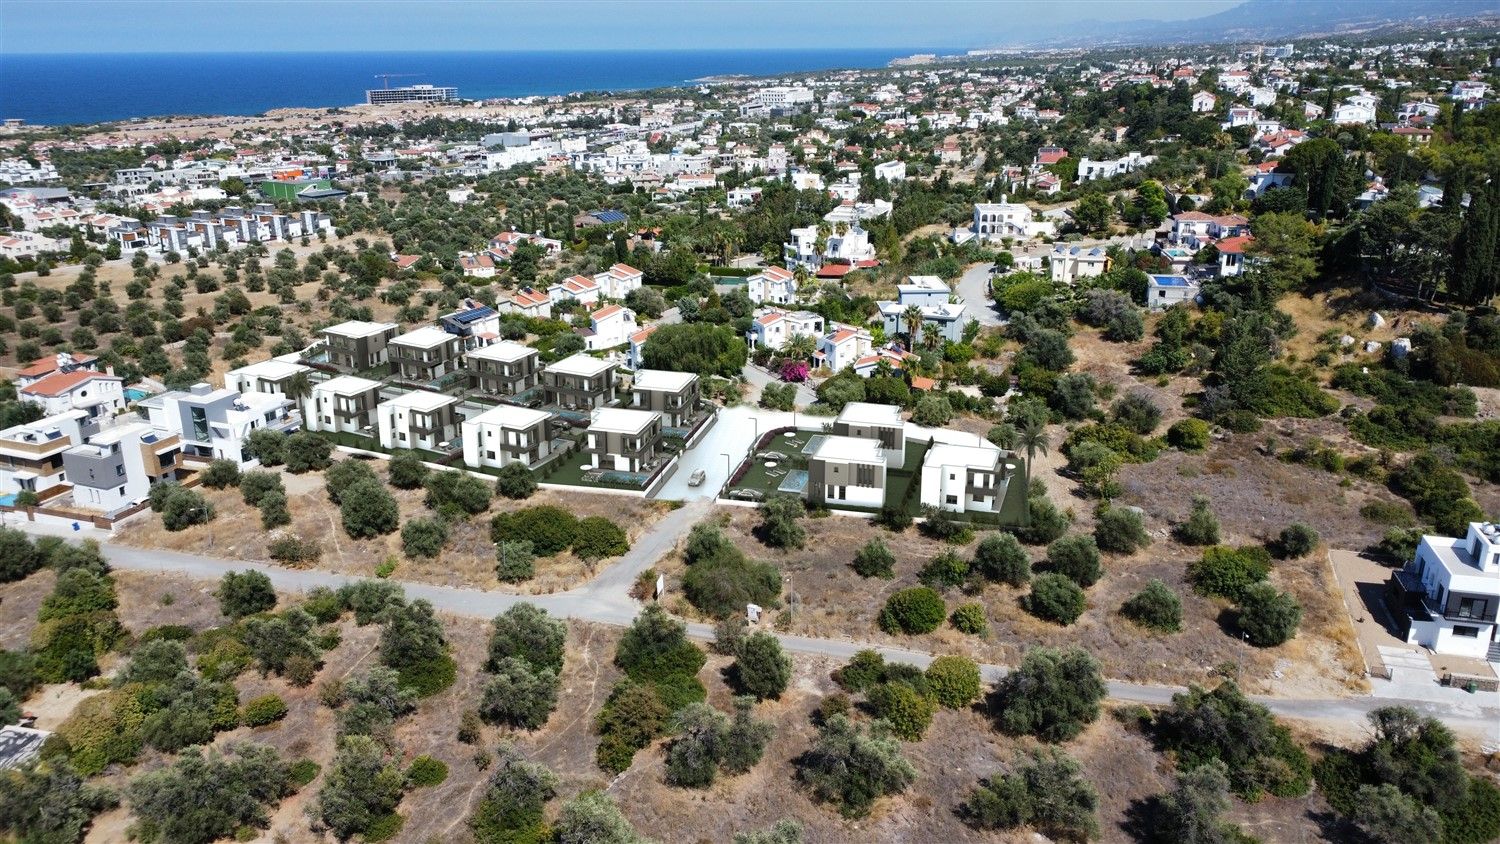 New complex of exquisite villas in quiet Çatalkoy region